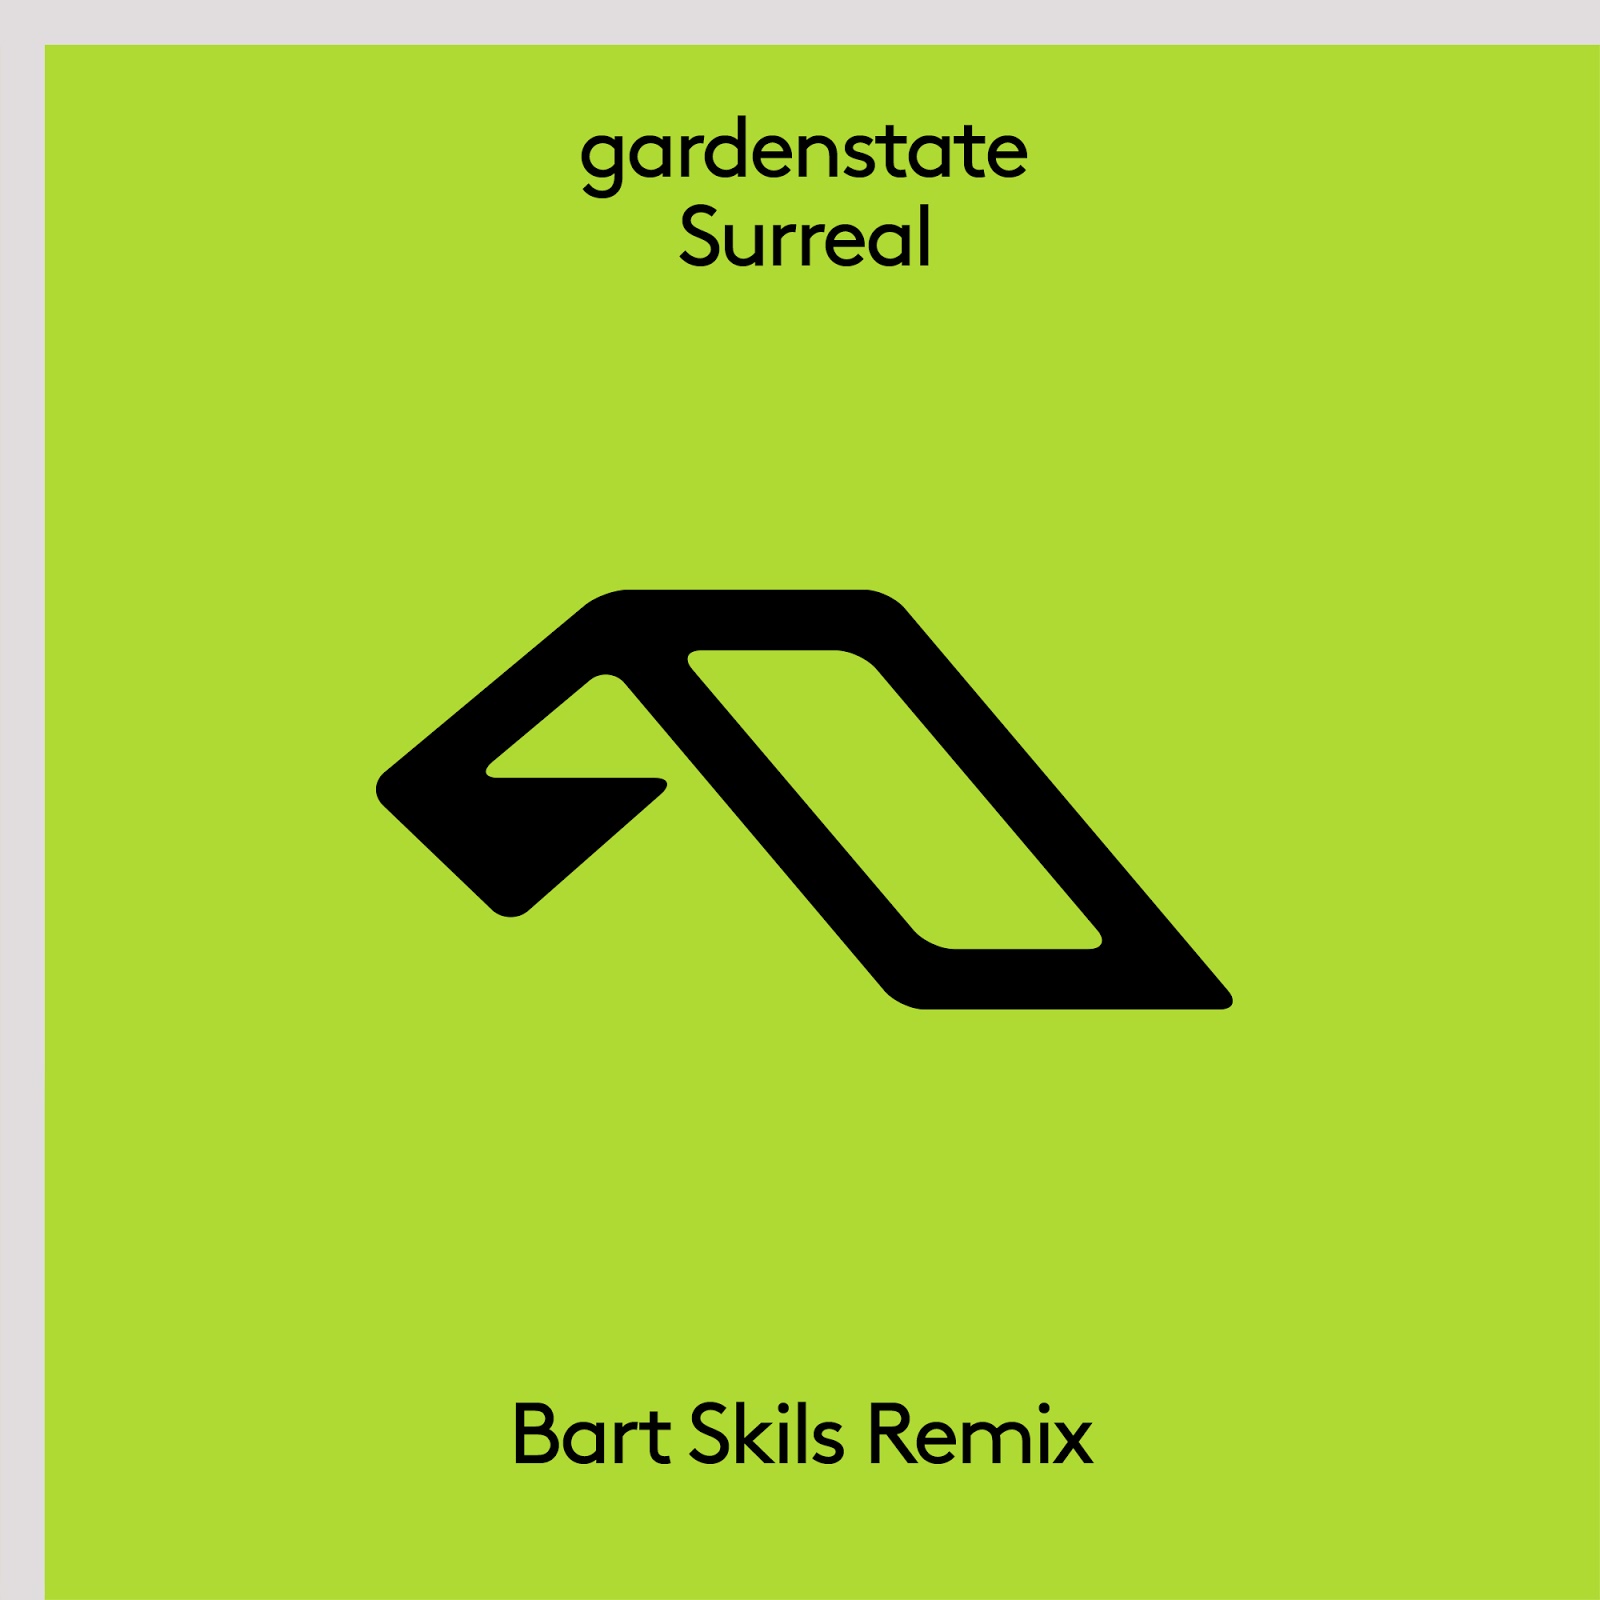 gardenstate presents Surreal (Bart Skils Remix) on Anjunabeats